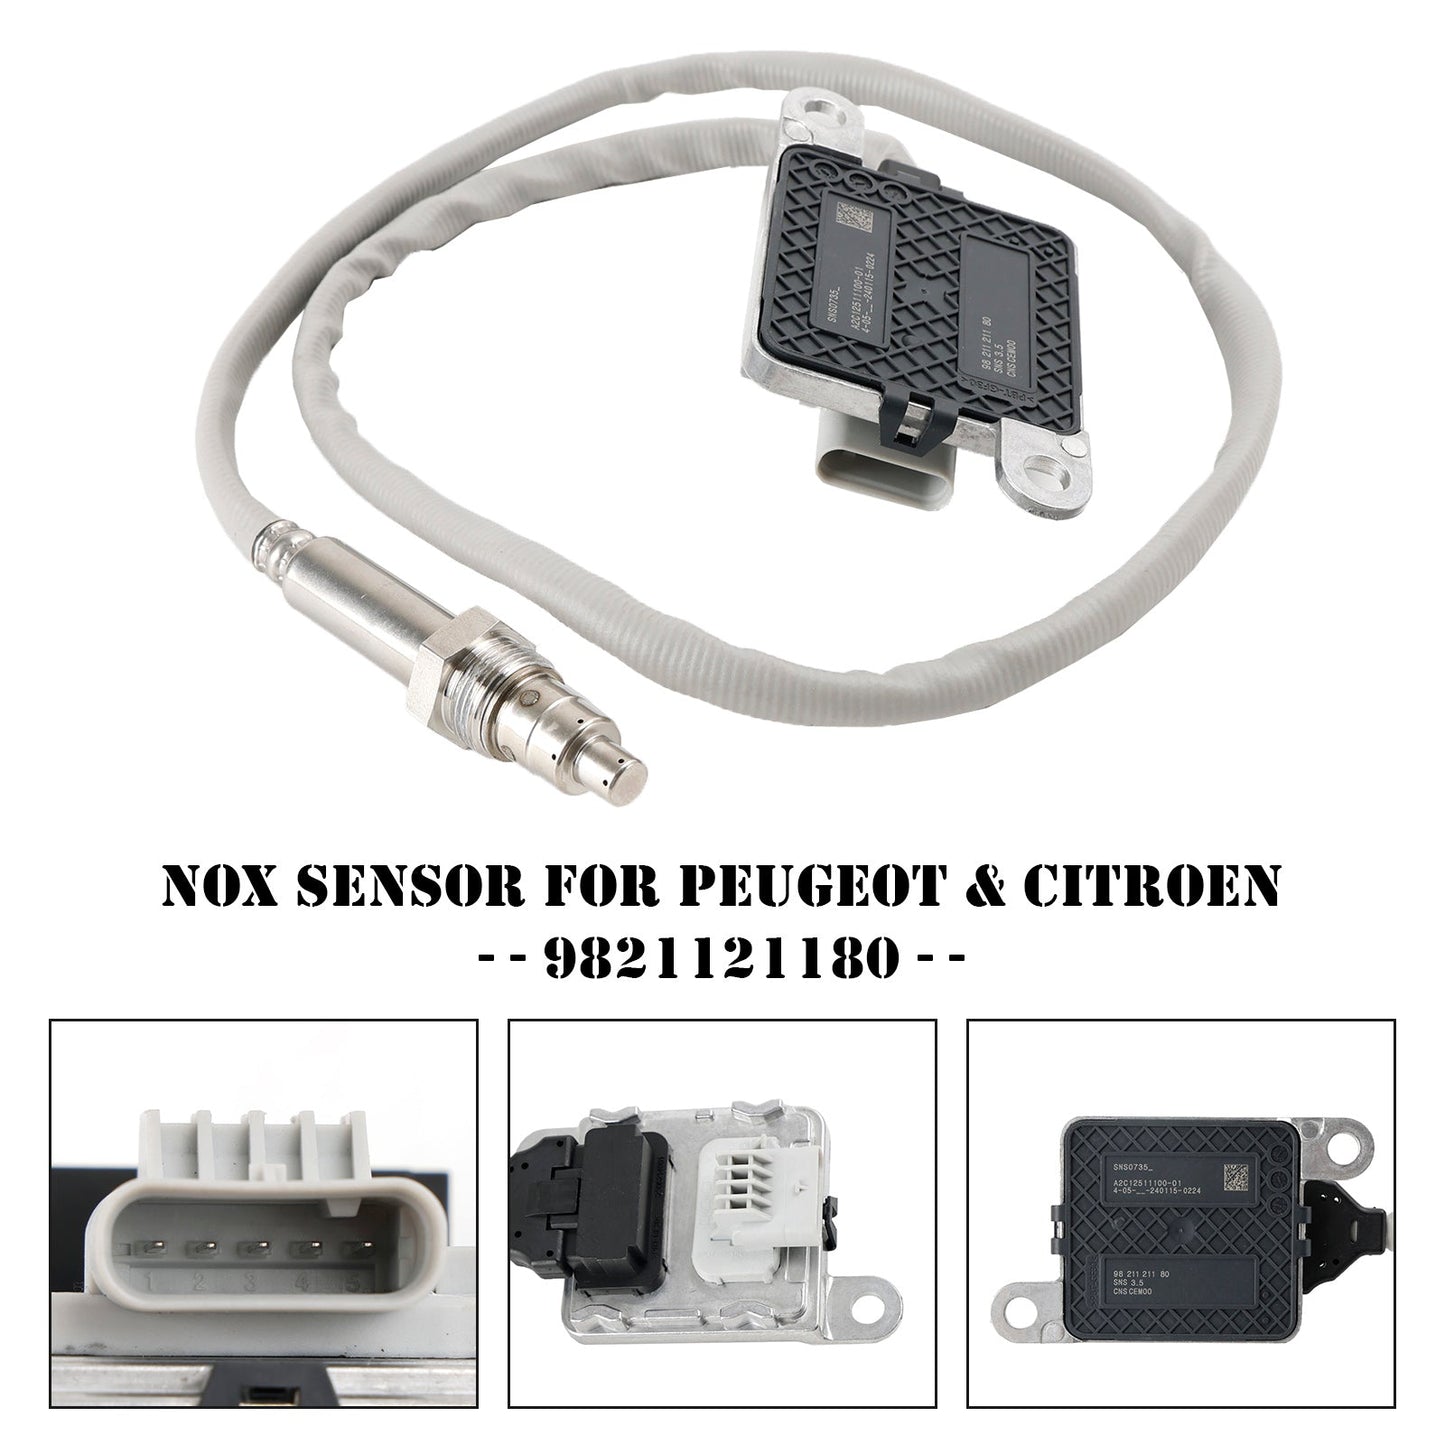 2014–2018 Peugeot 508 2.0 HDi Nox-Sensor 9821121180